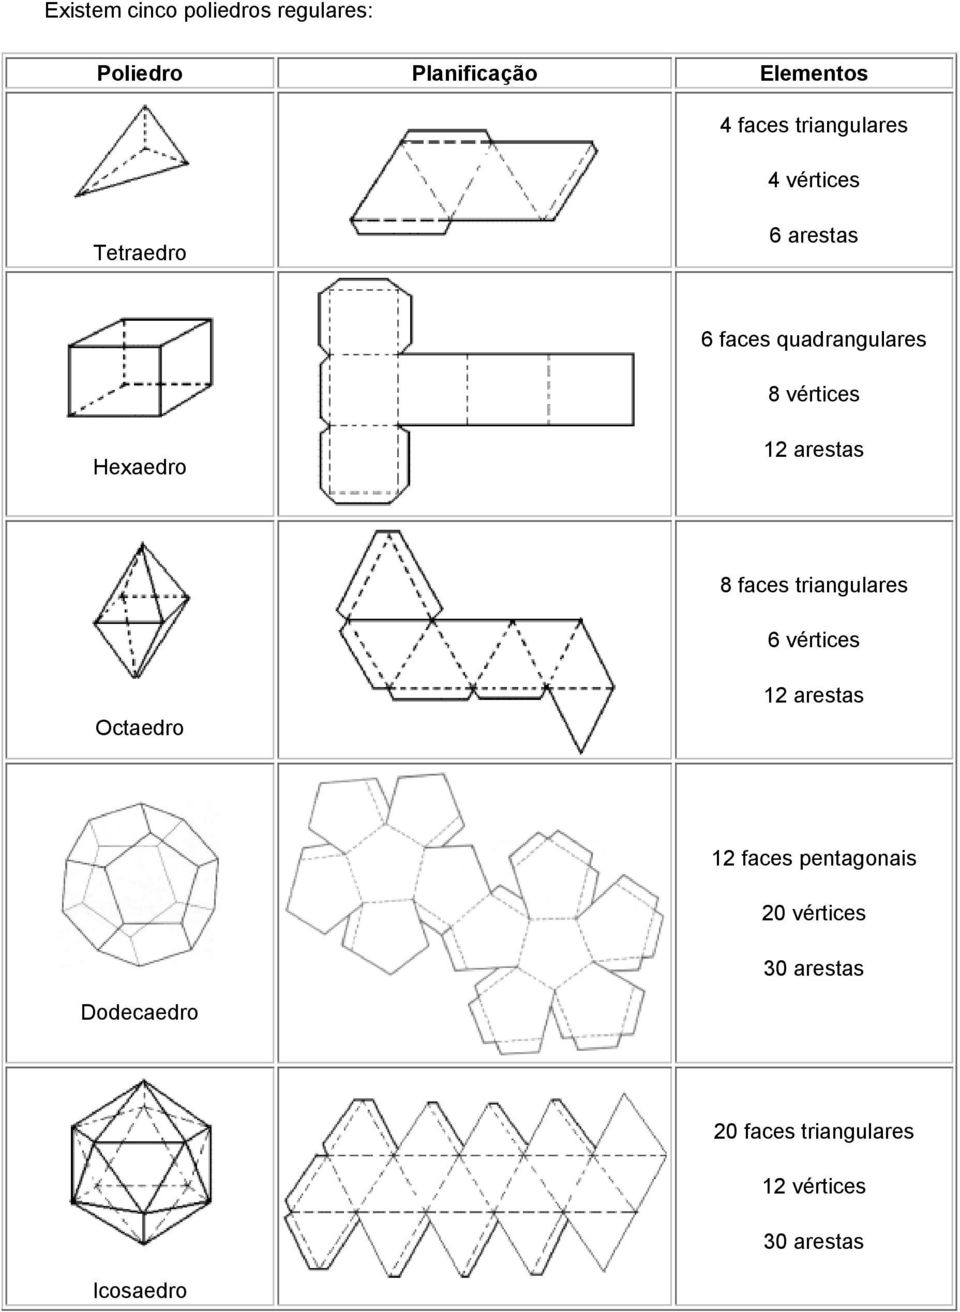 Hexaedro 12 arestas 8 faces triangulares 6 vértices Octaedro 12 arestas 12 faces